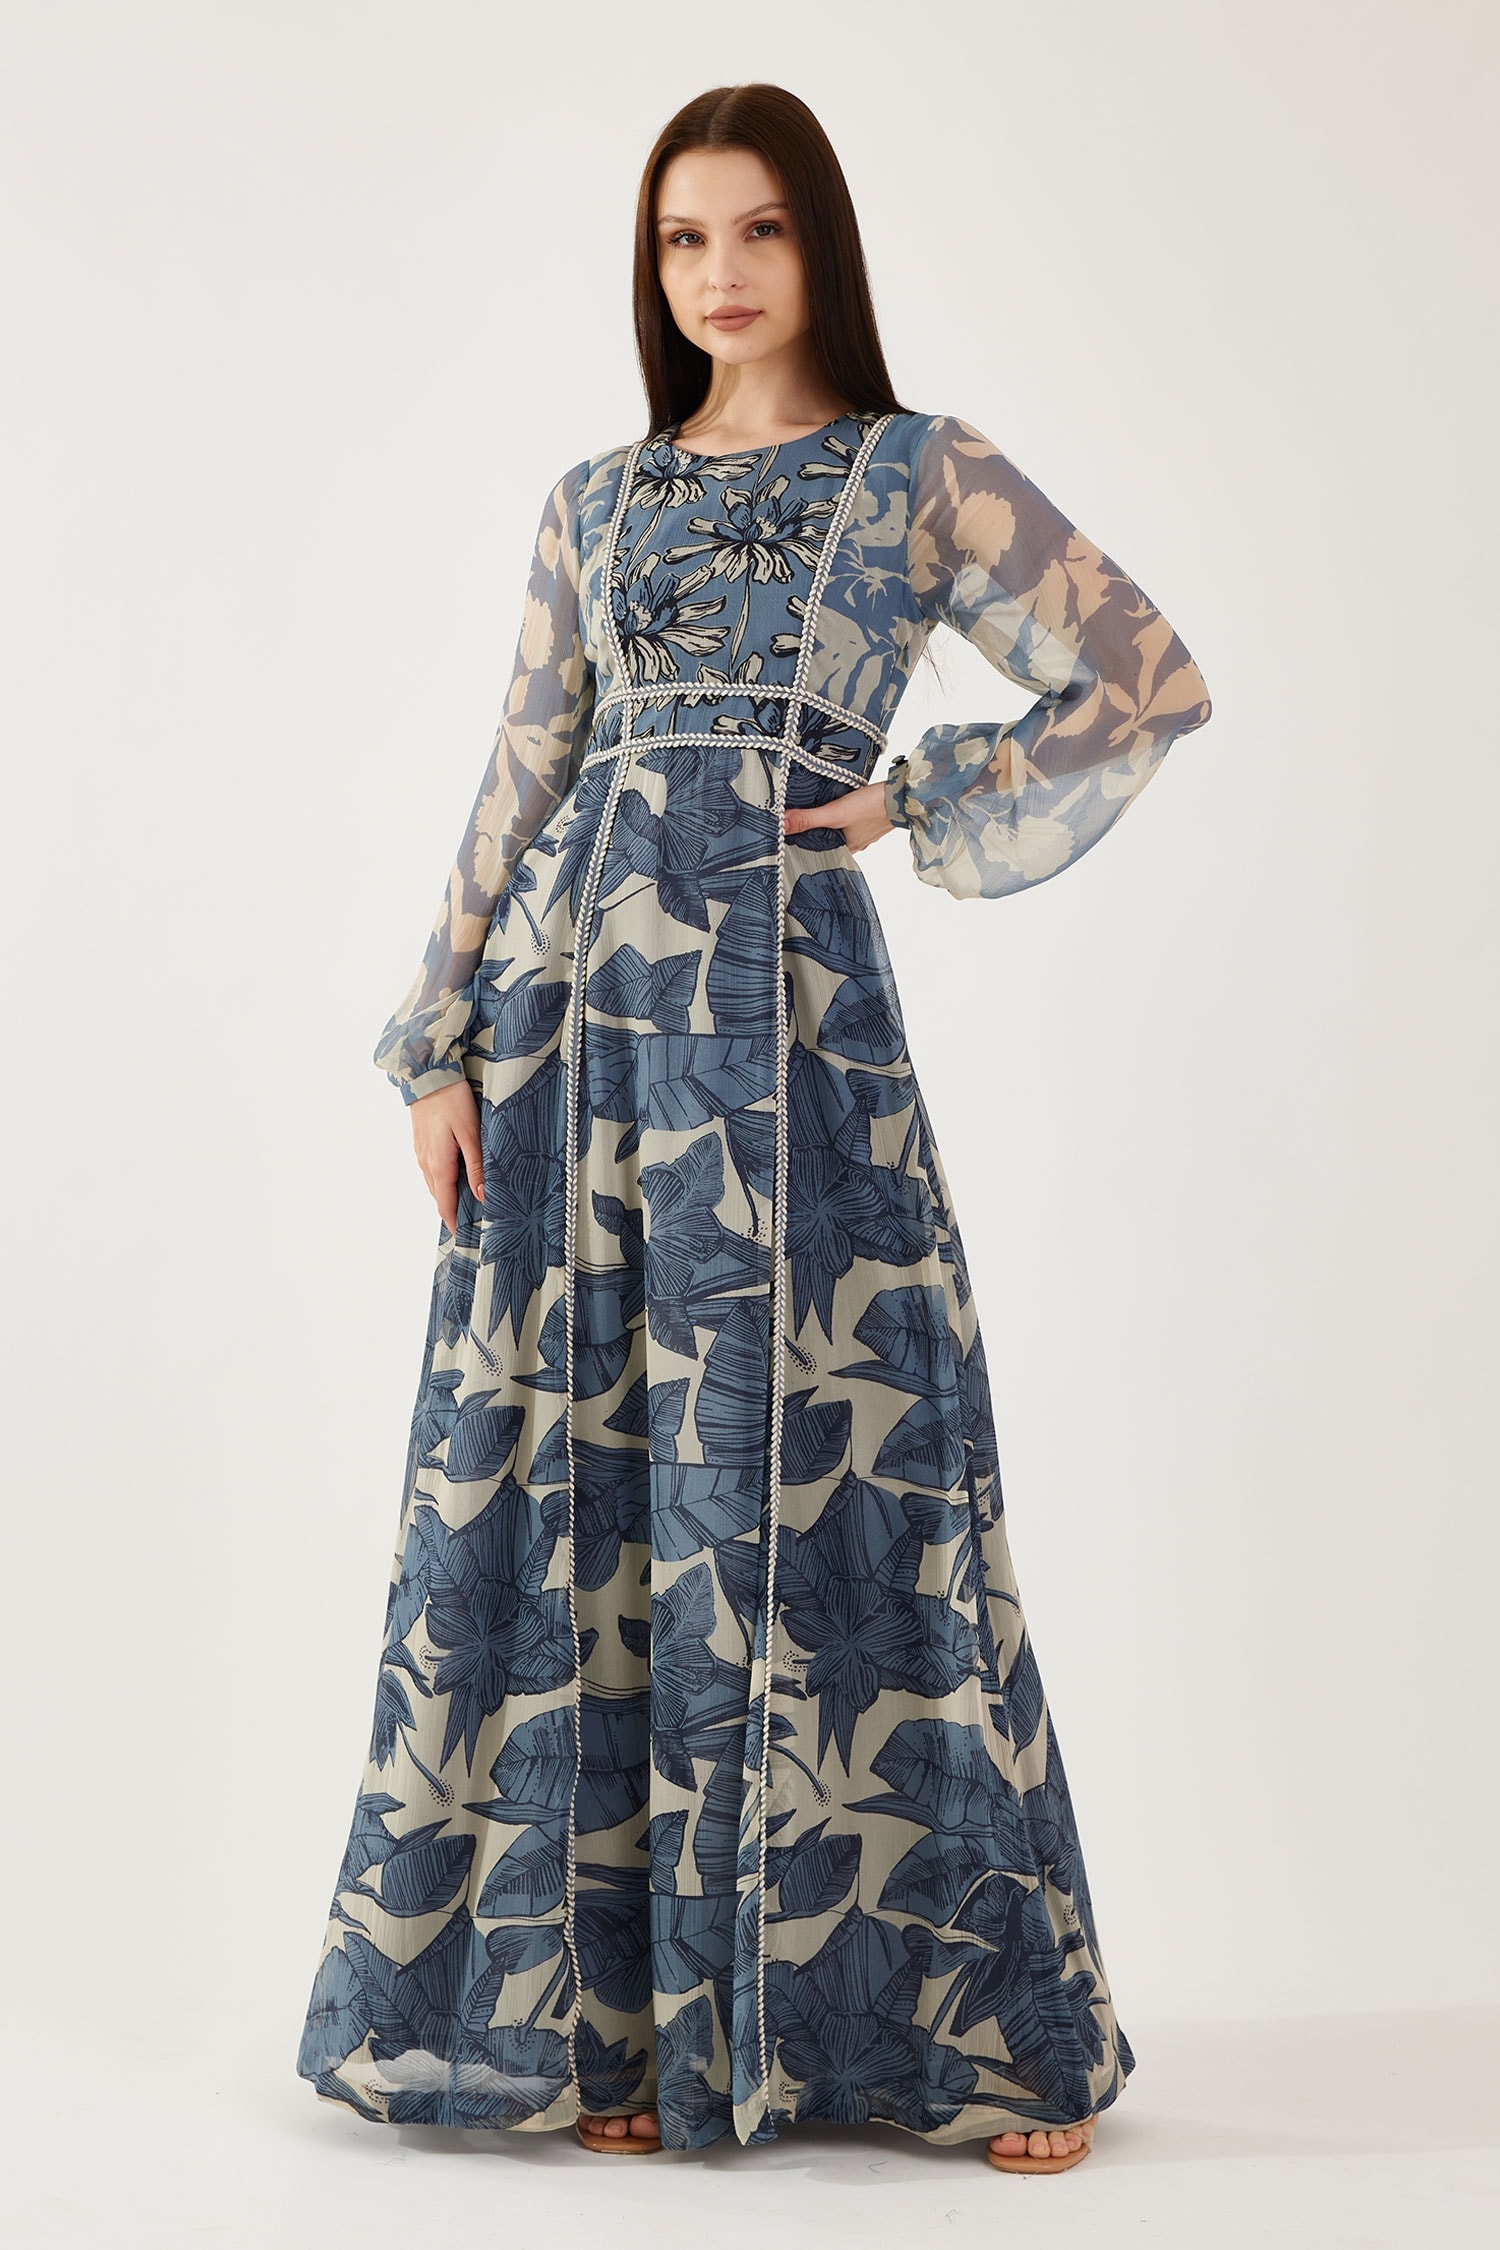 KoAi Blue Chiffon Floral Print Maxi Dress